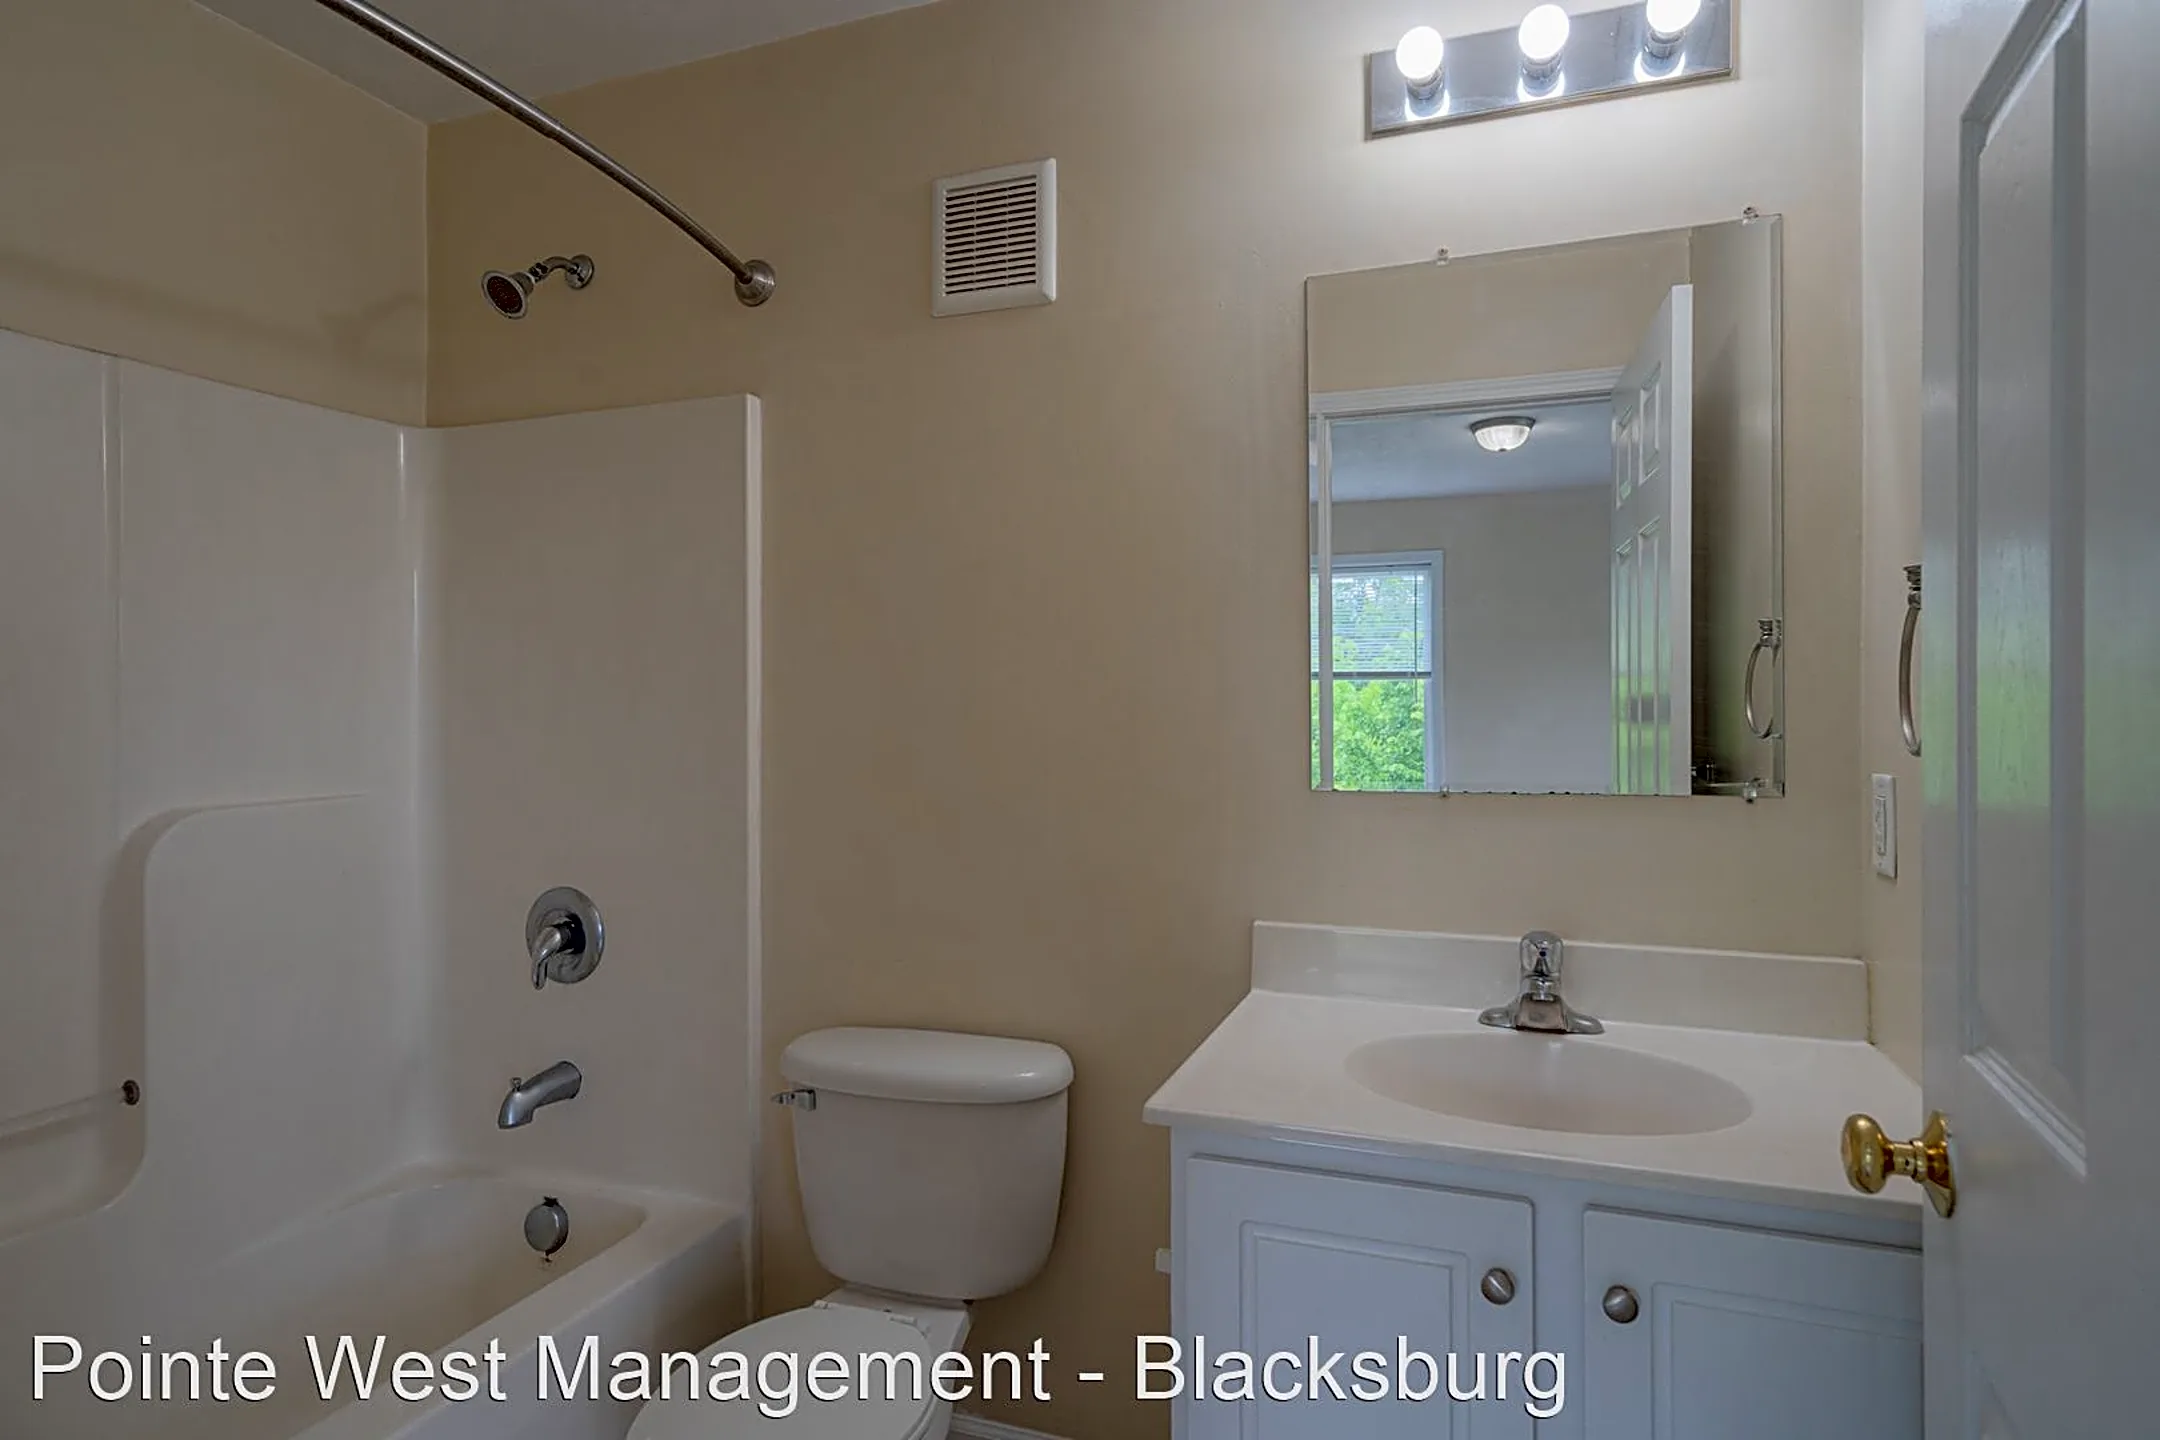 Bathroom - 200 Fairfax Road - Blacksburg, VA